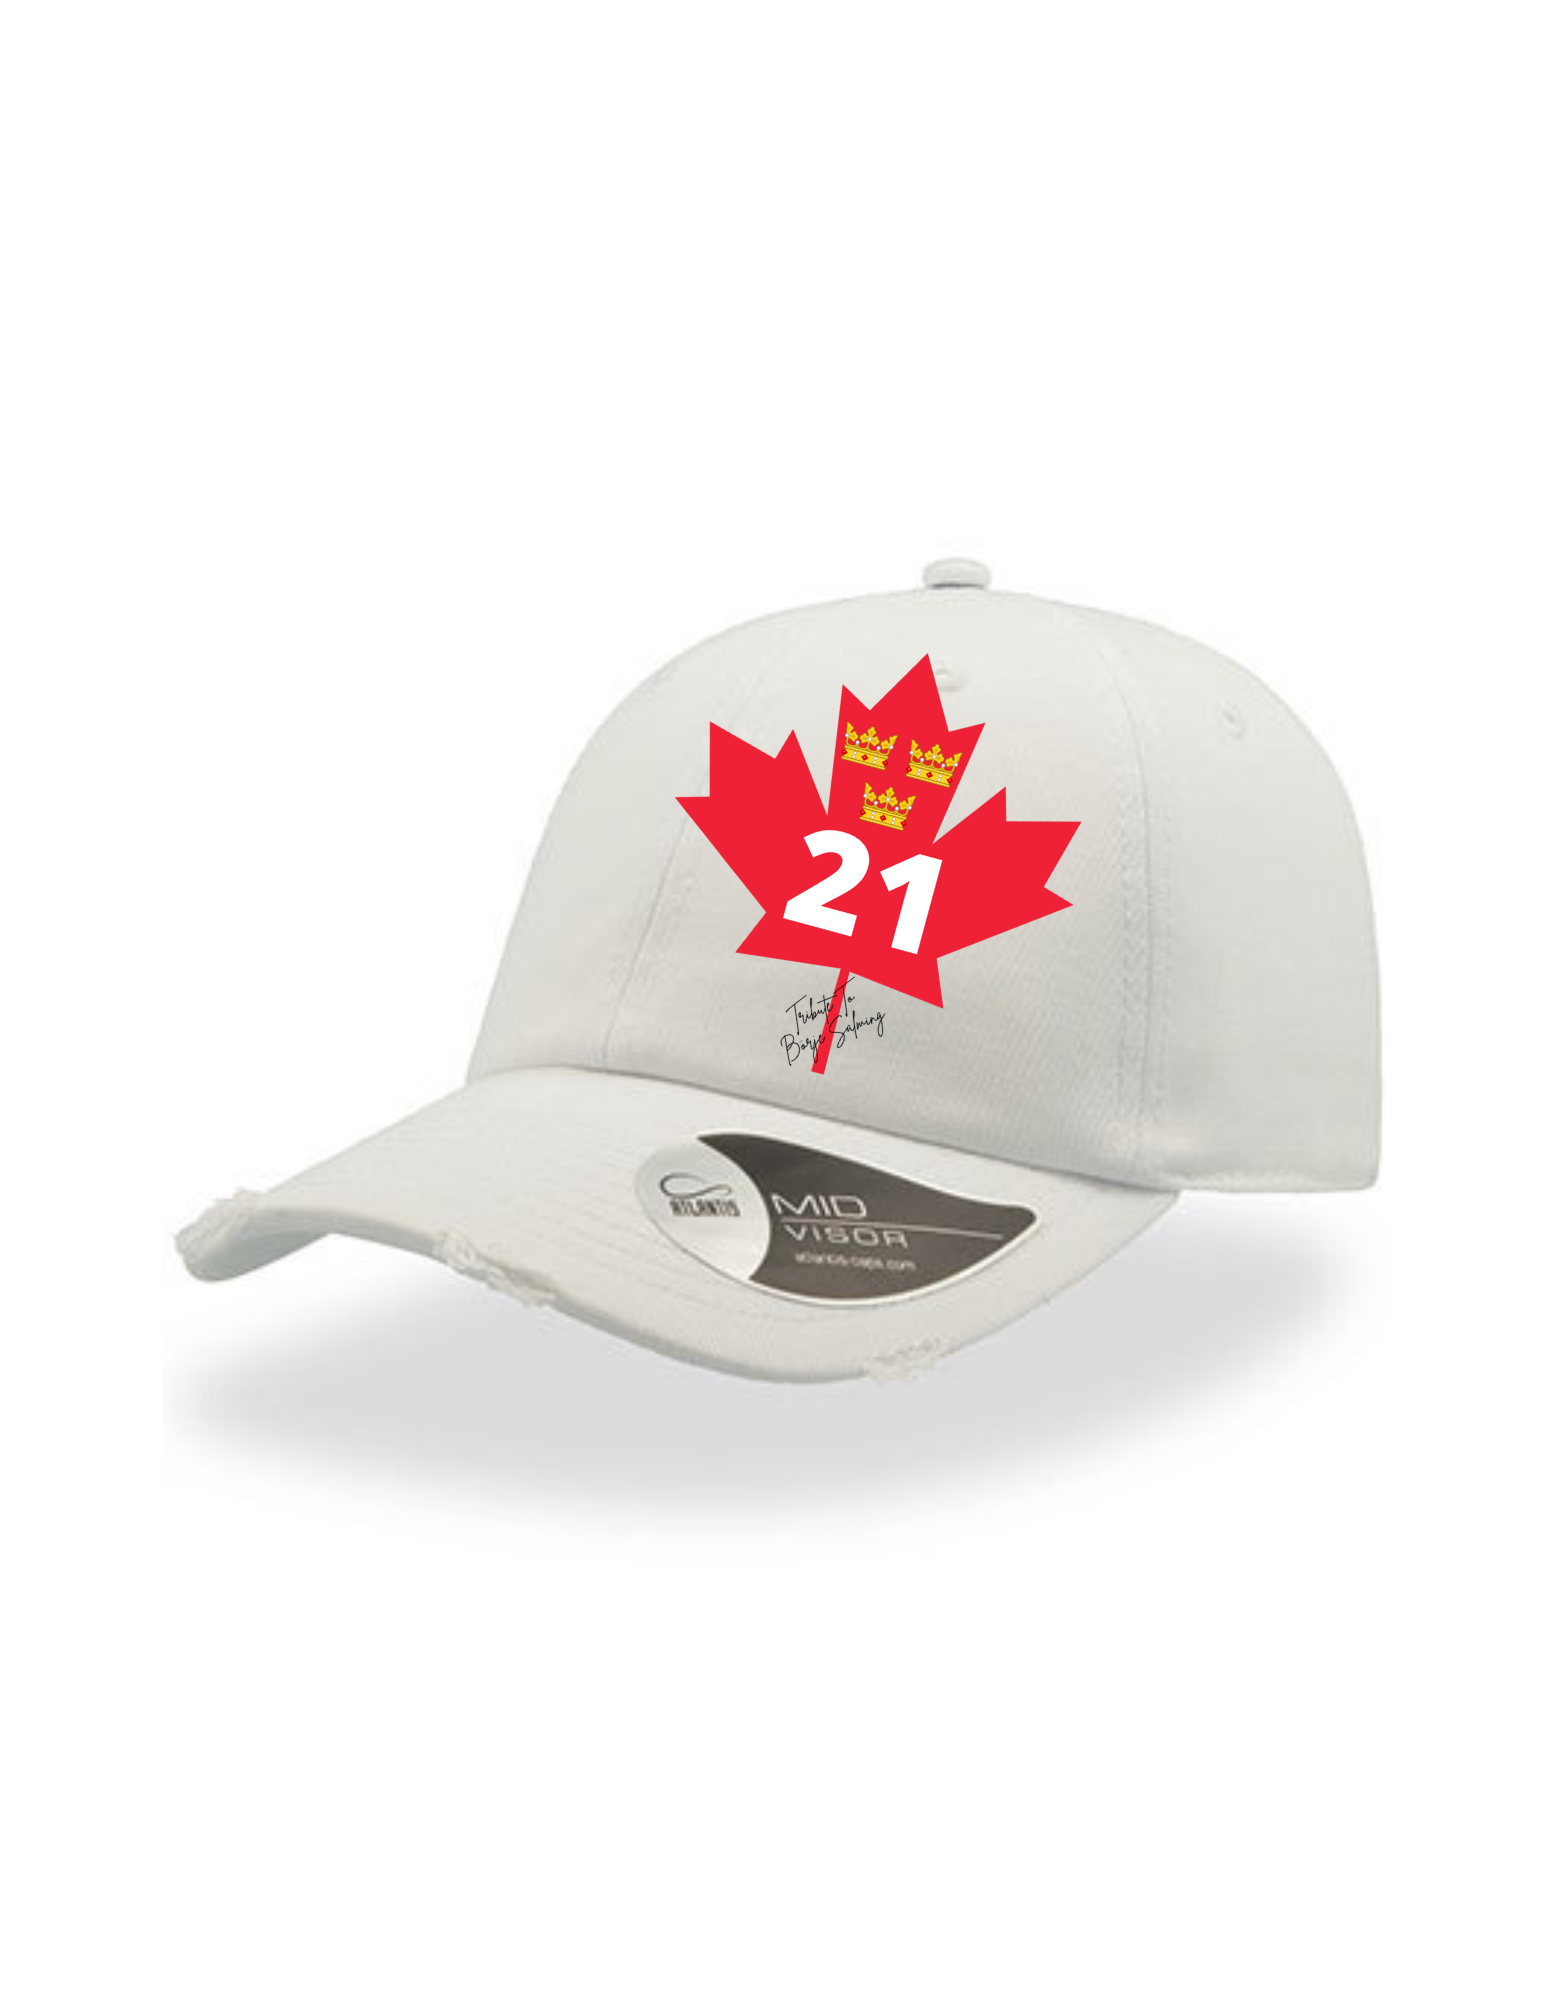 Tribute To Börje Salming Cap, Cap model "destroyed", Buying Börje Salming Merchandise. In the loving memory of Börje Salming.Börje Salming Tribute, Toronto Maple Leafs